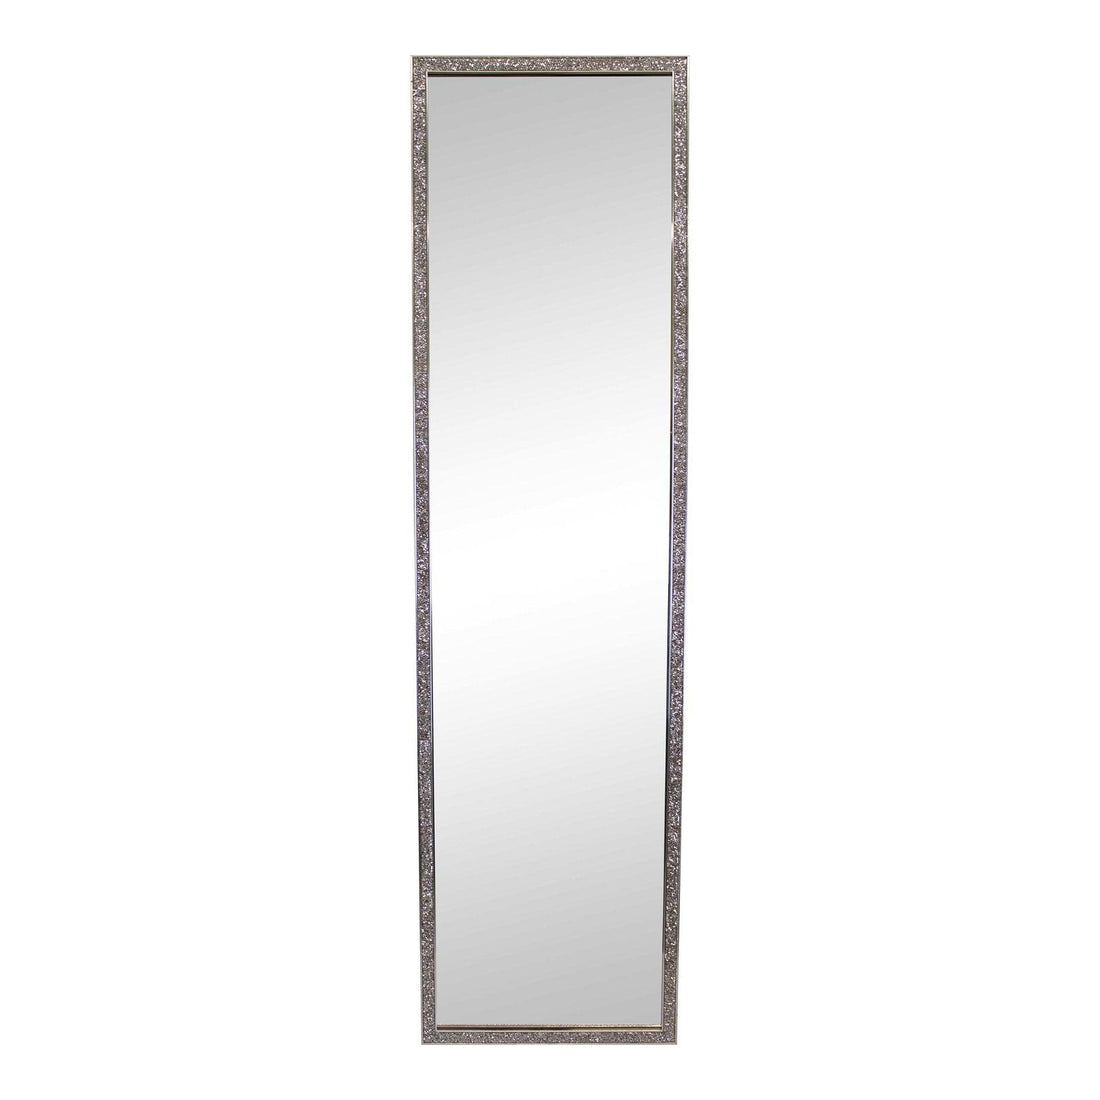 Tall, Slim Jewelled Frame Mirror 125cm - £85.99 - Mirrors 